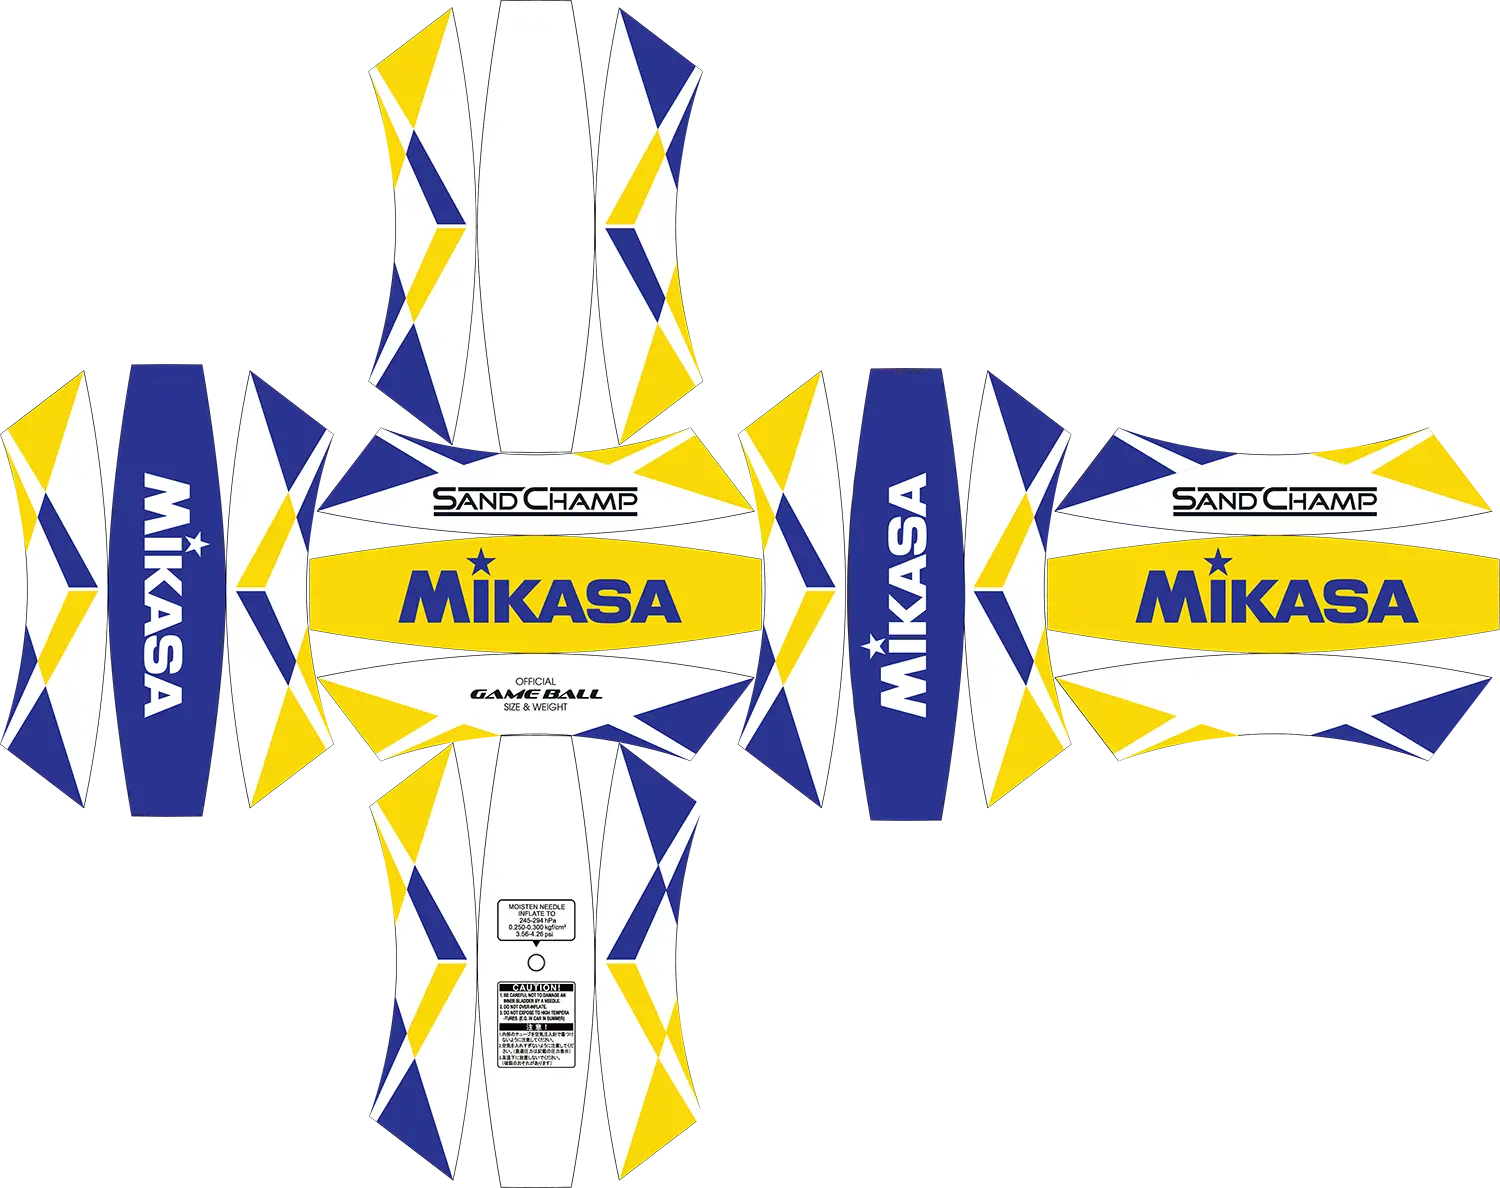 Mikasa ball design layout